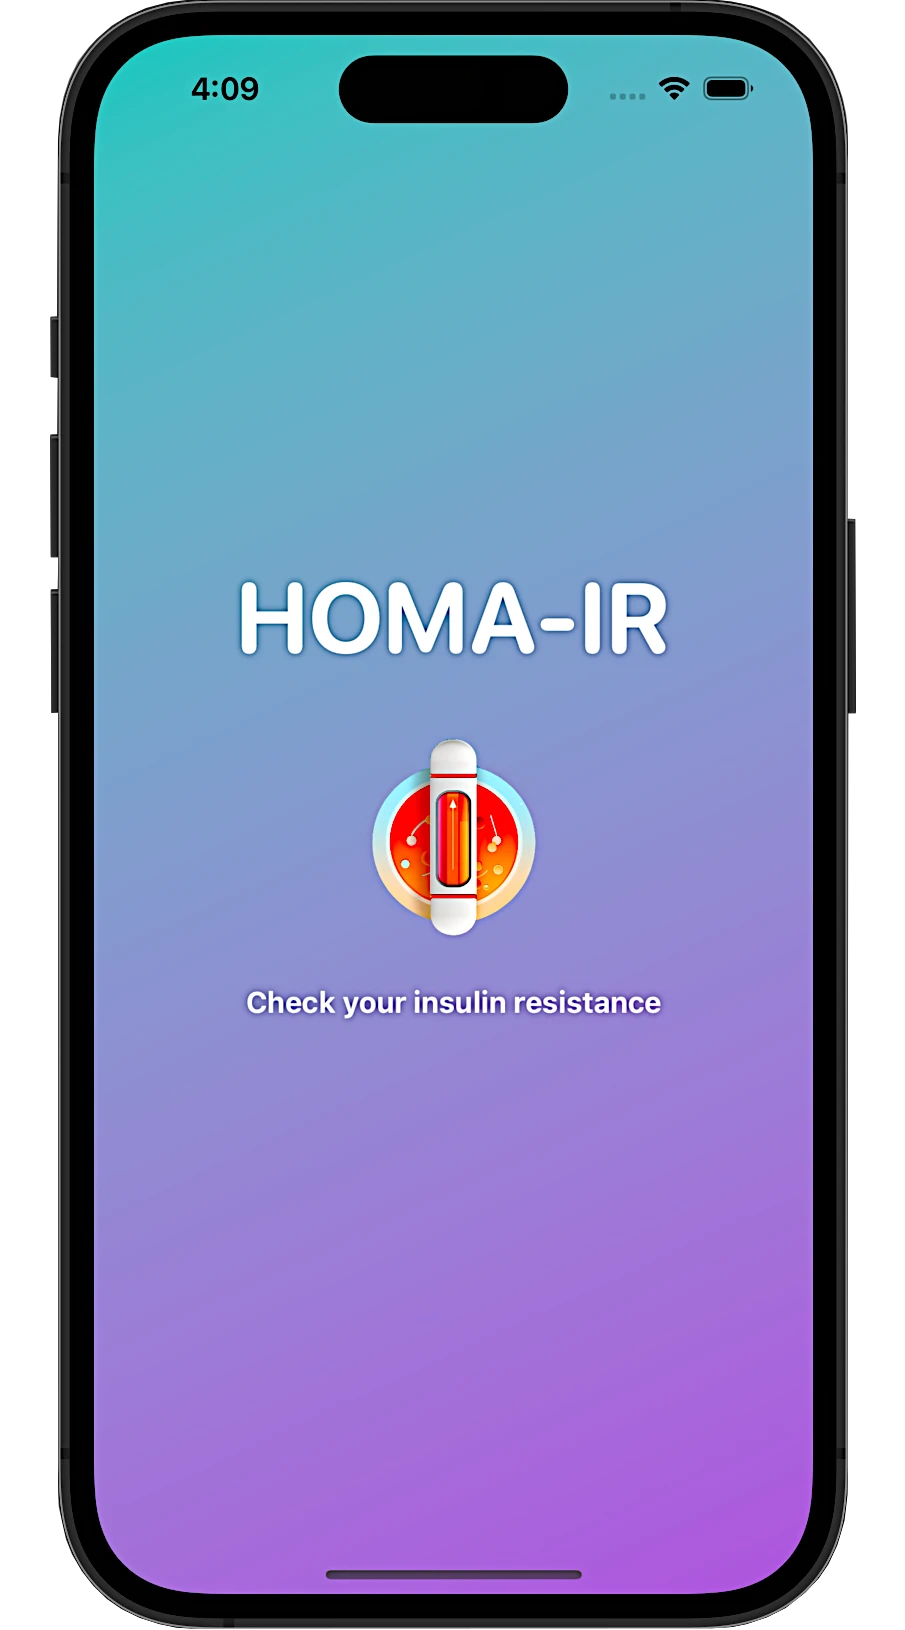 Iphone running HOMA-IR app